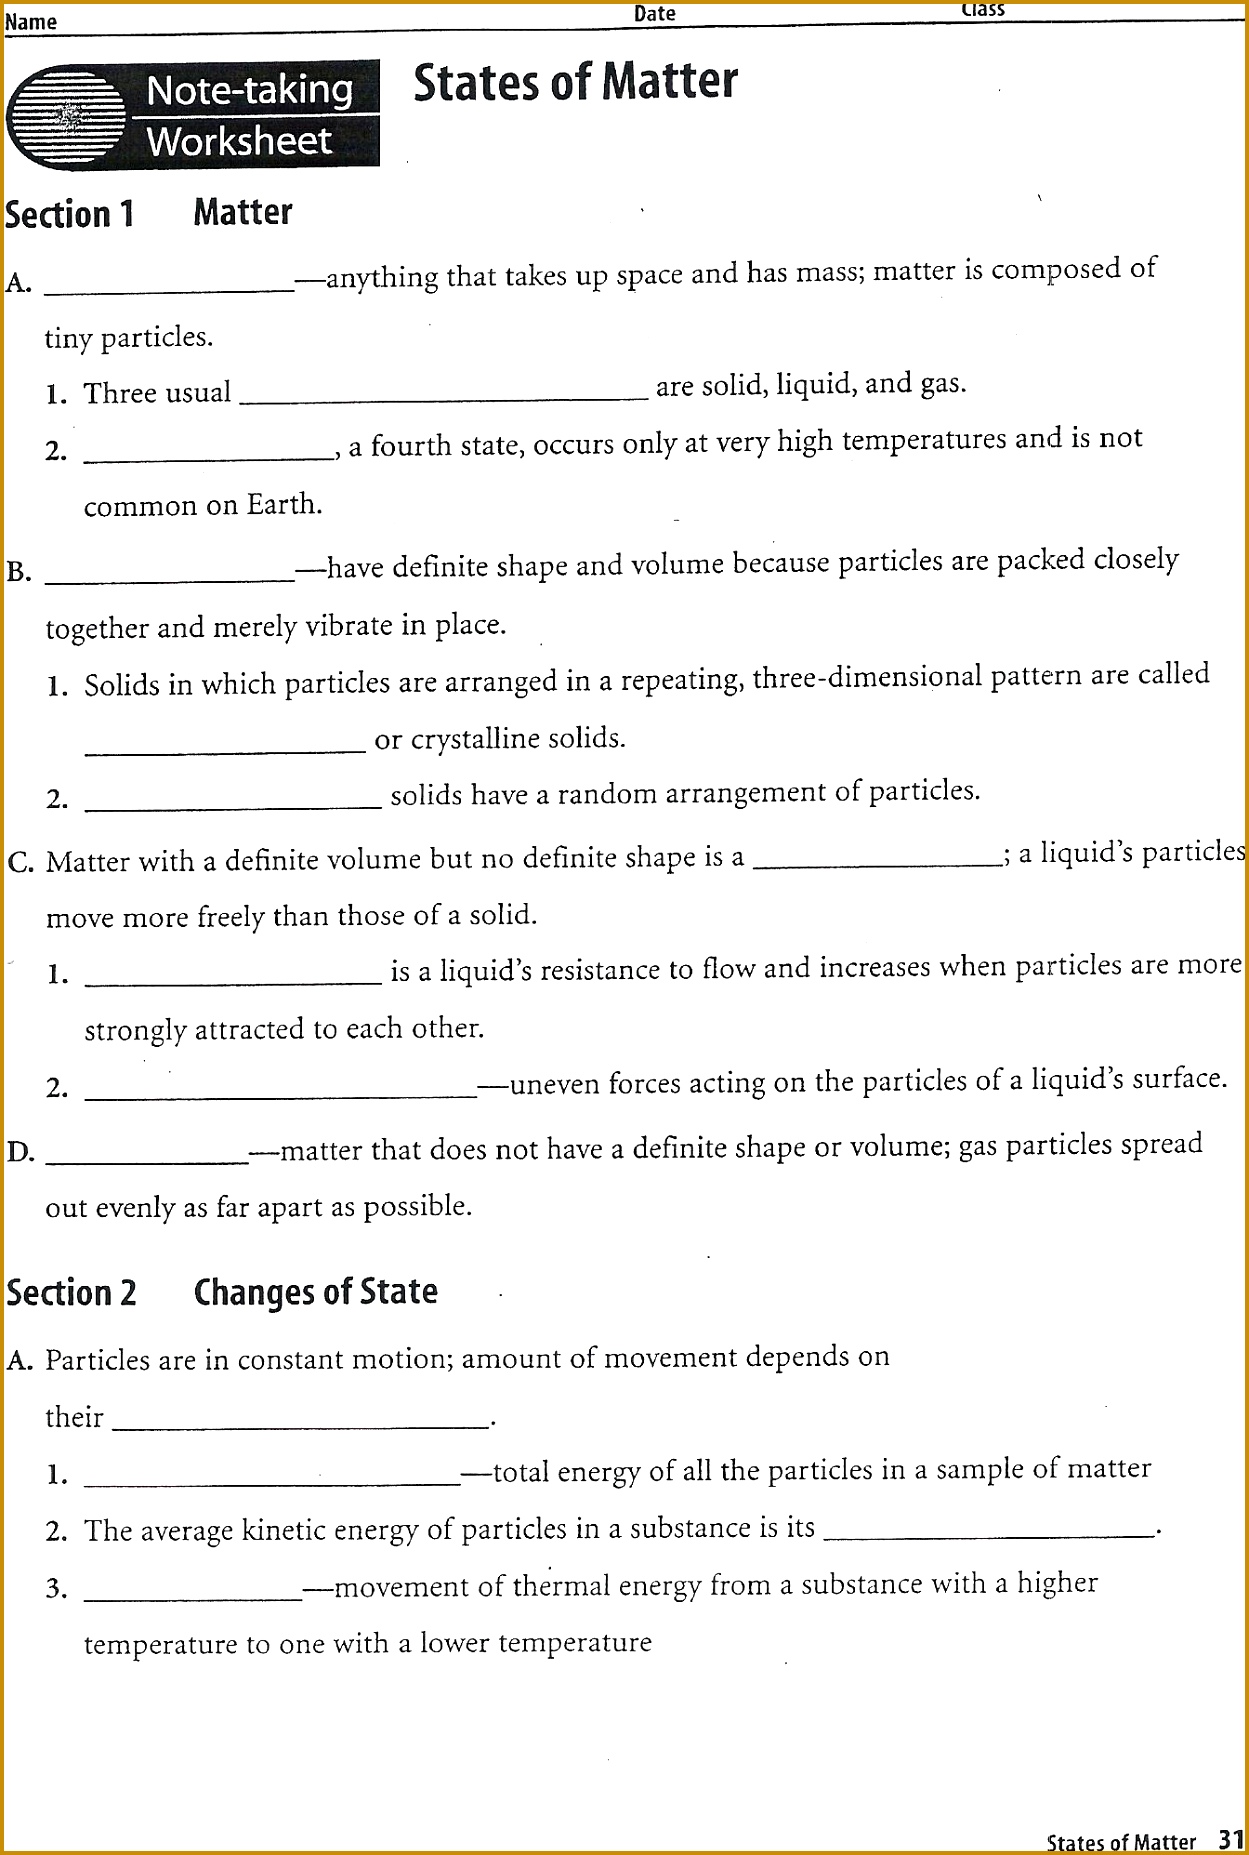 Three States Matter Worksheets Chemistry Worksheet Pdf 18551249